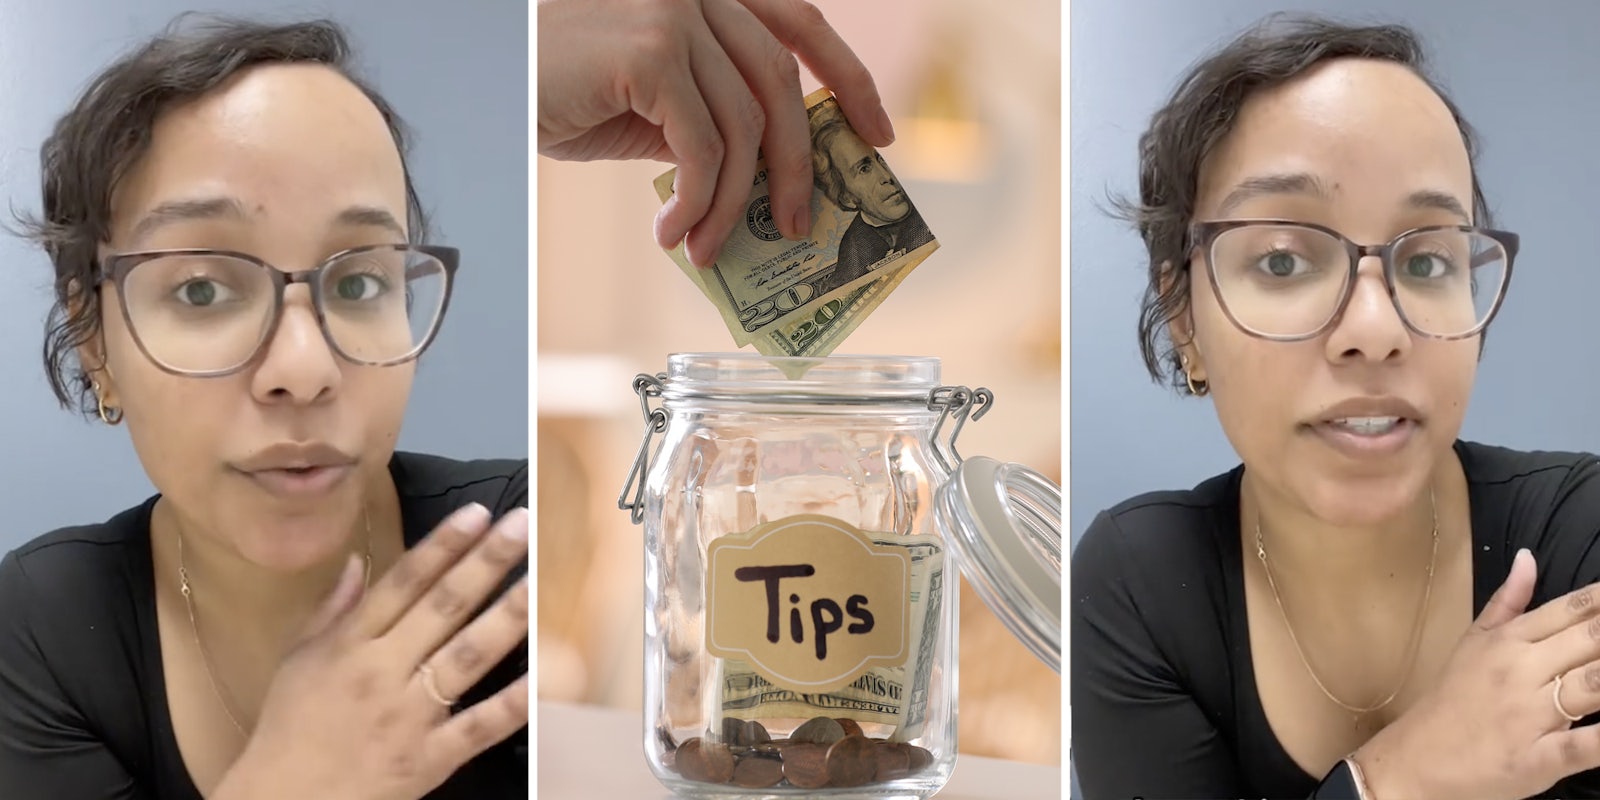 Woman talking(l+r), Hand putting money in tip jar(c)